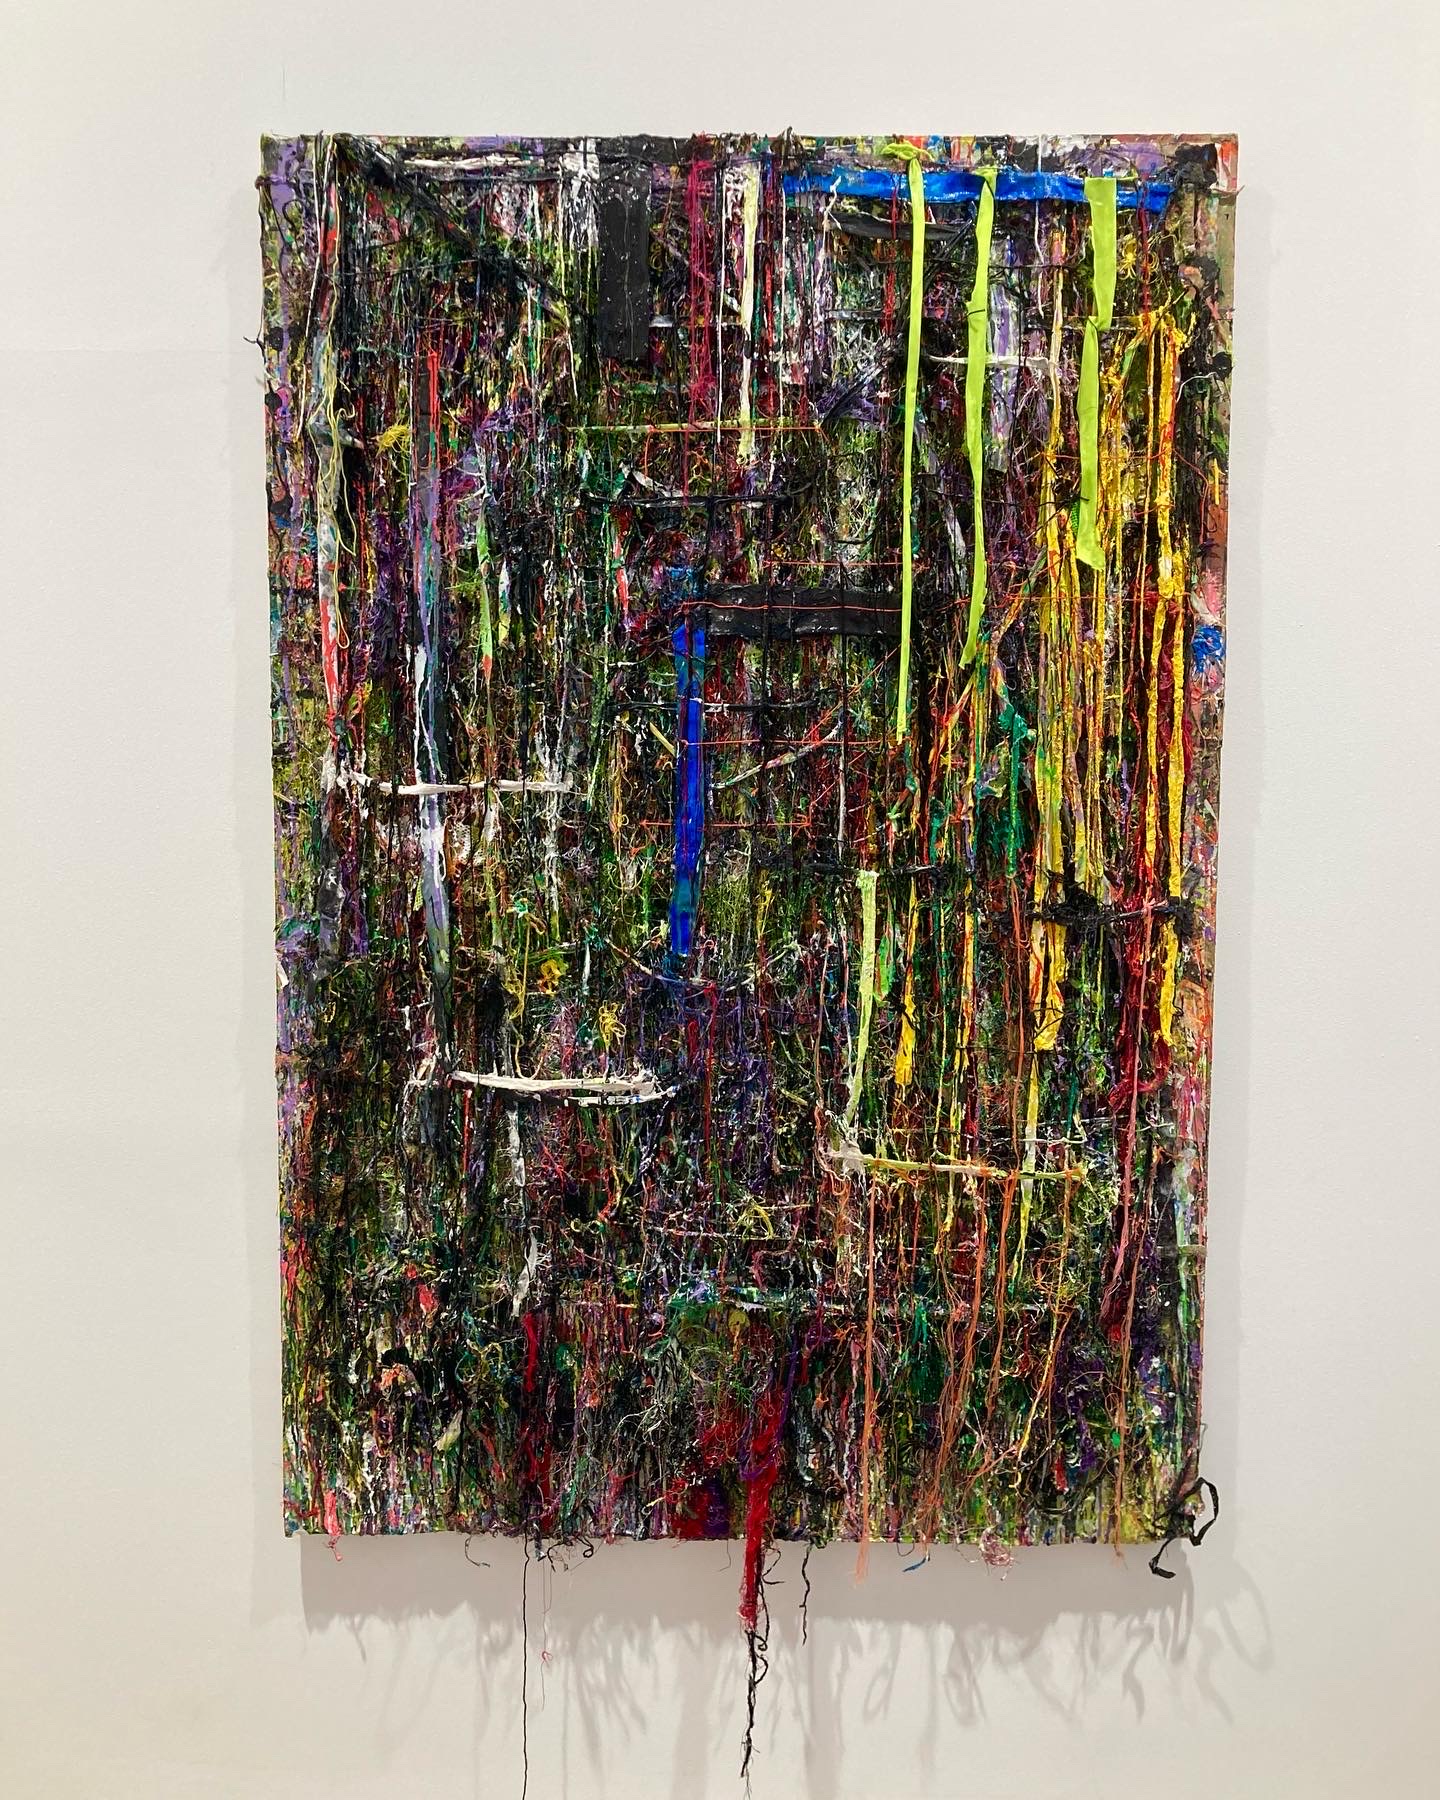 Jakob Westberg, "Patchwork no. 6 (Slipstream) "2022   
Akryl, pigment, epoxy, tempera, sprayfärg, lim, textil, tråd, masonit, monterat på aluminium 
121 x 181,5 cm
